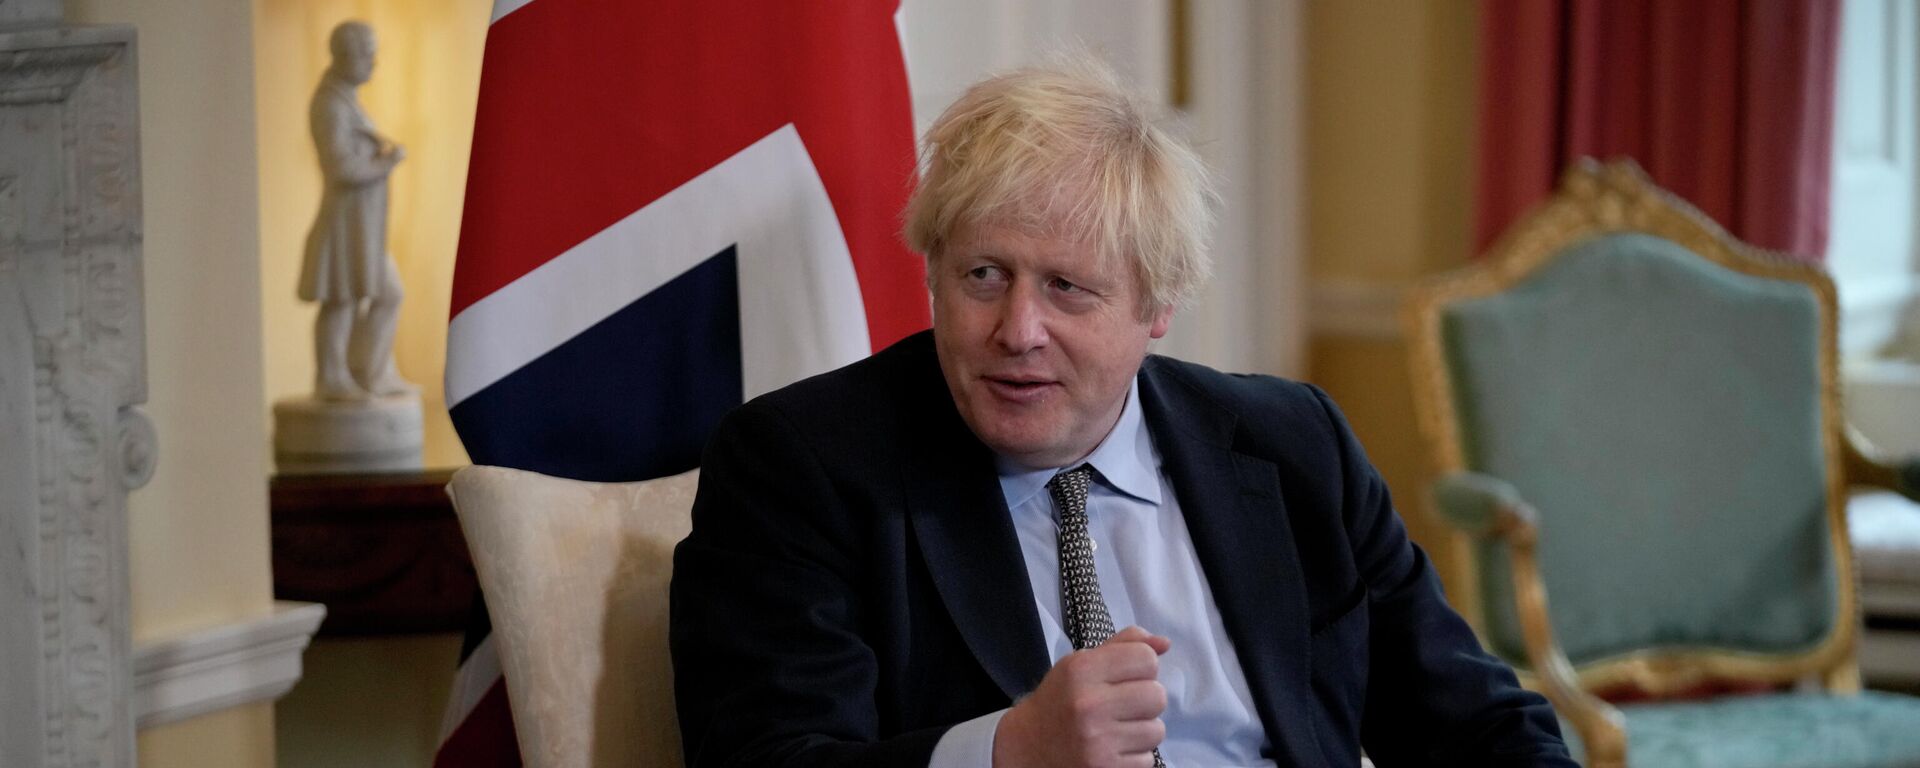 British Prime Minister Boris Johnson speaks with Polish Prime Minister Mateusz Morawiecki at the start of their meeting inside 10 Downing Street, in London, Friday, Nov. 26, 2021 - Sputnik International, 1920, 26.11.2021